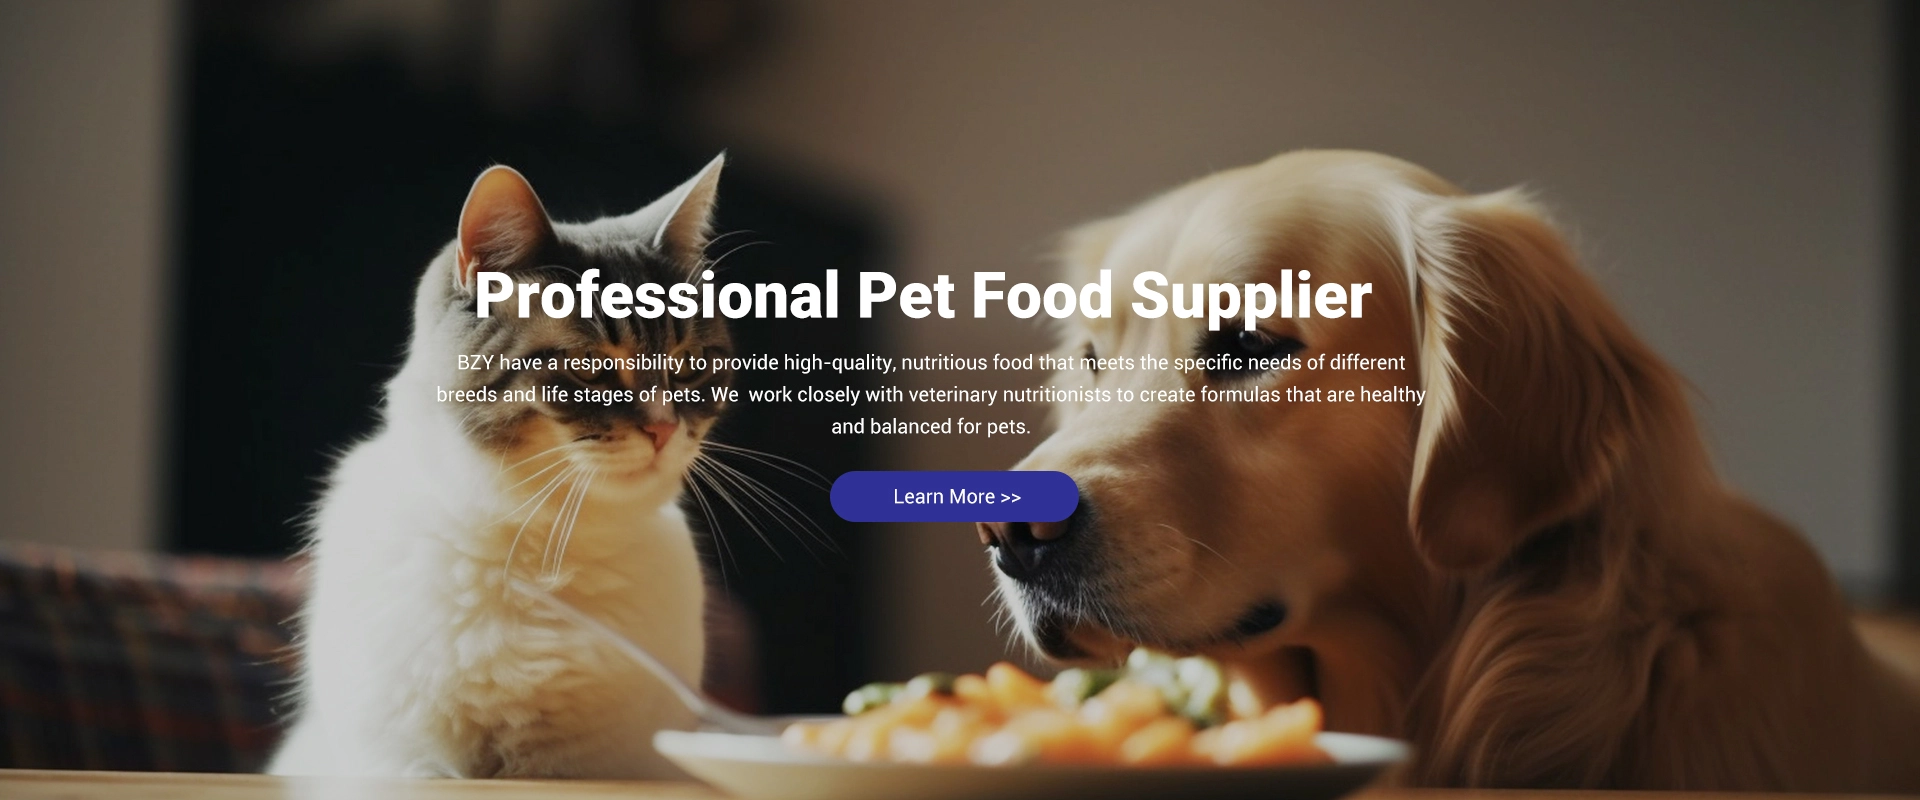 Professional Pet Food Supplier